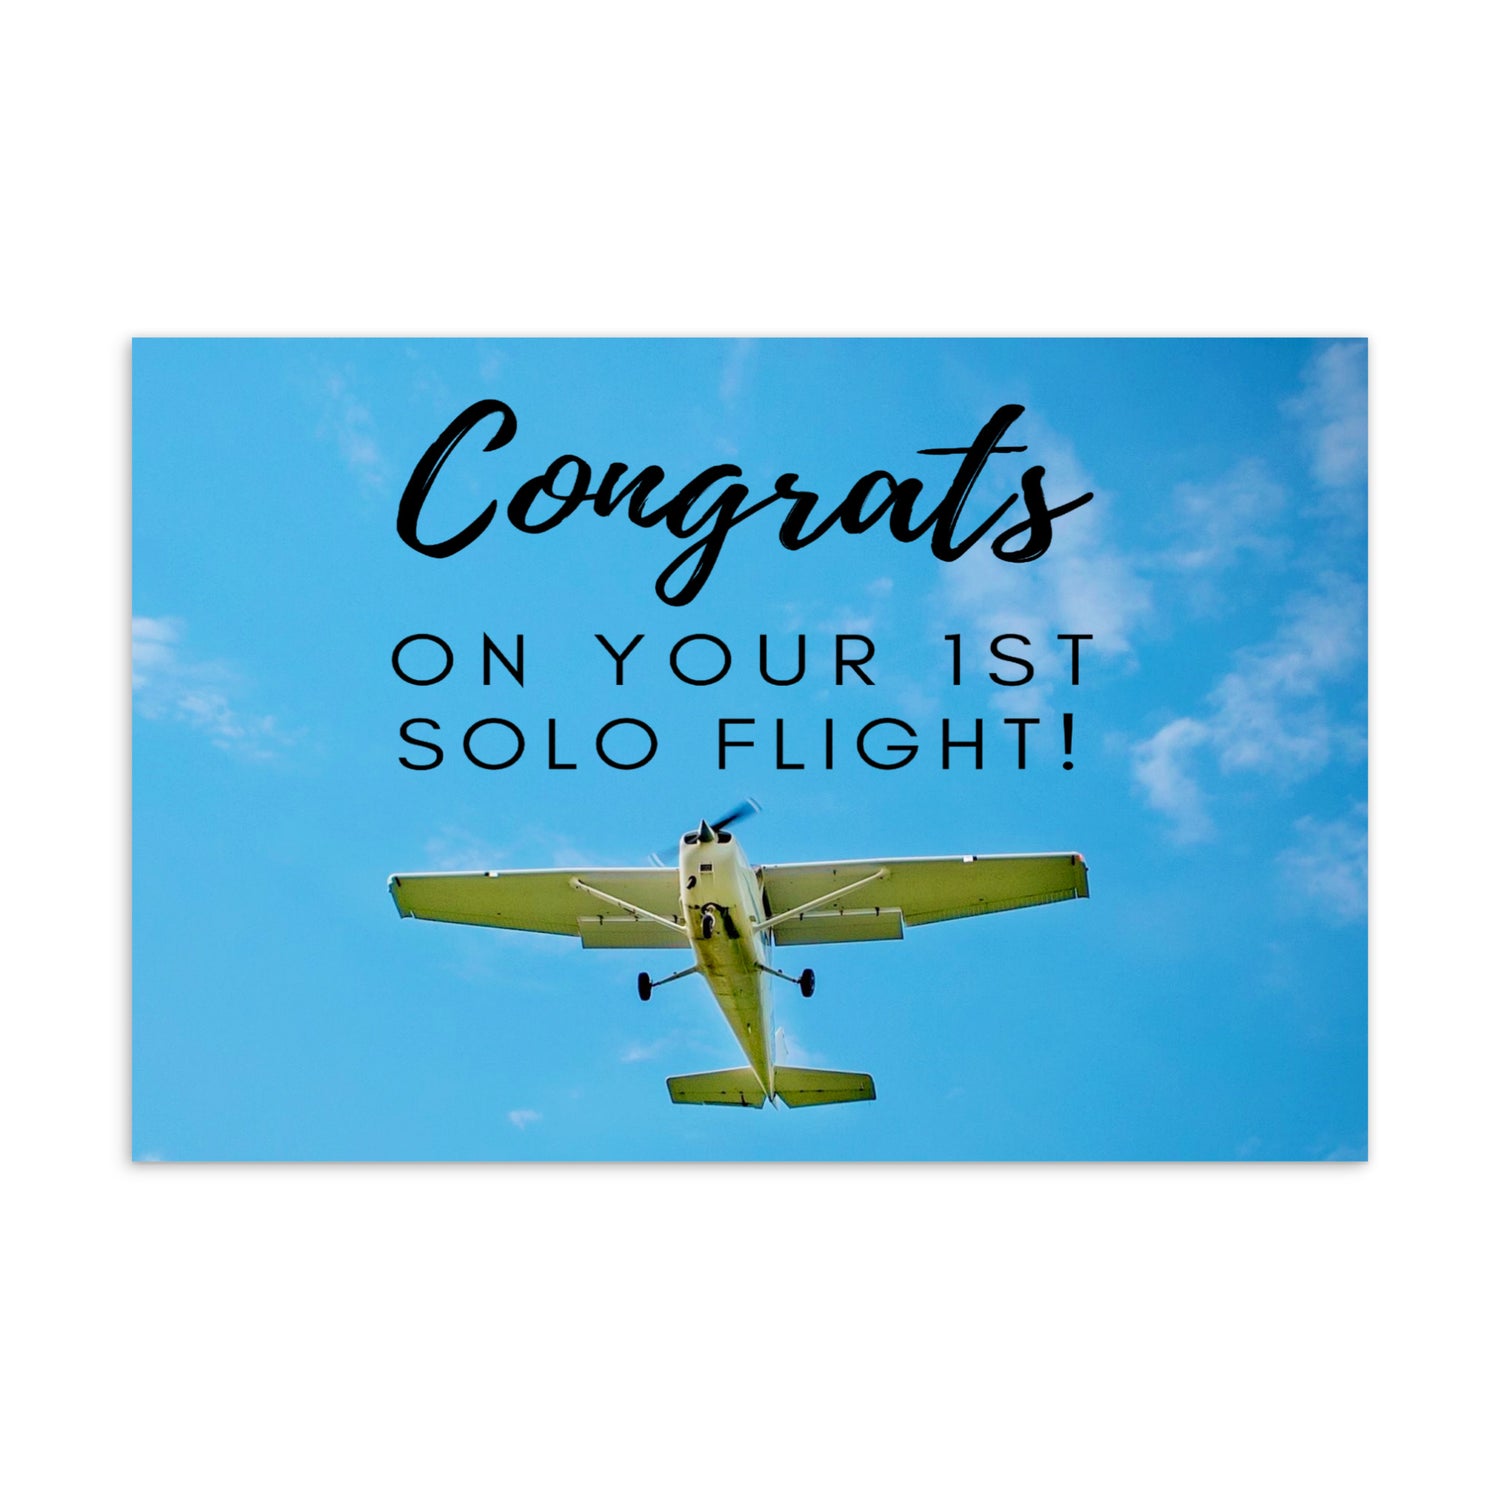 Congrats on your 1st Solo Flight! - postcard (Cessna)